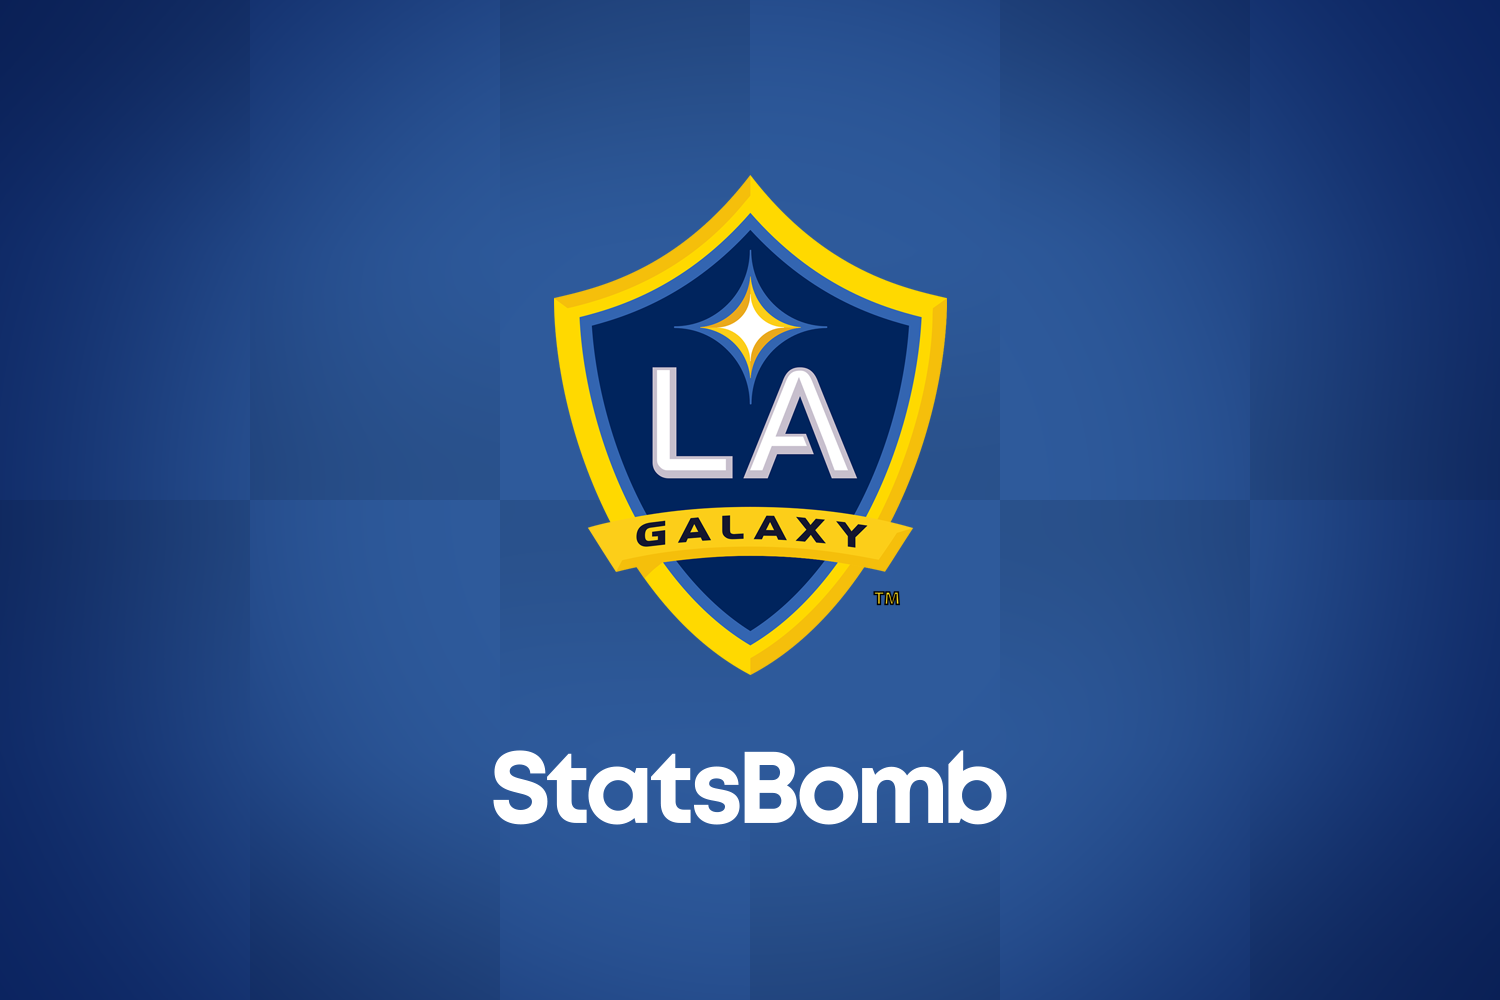 StatsBomb Announce Partnership With The LA Galaxy